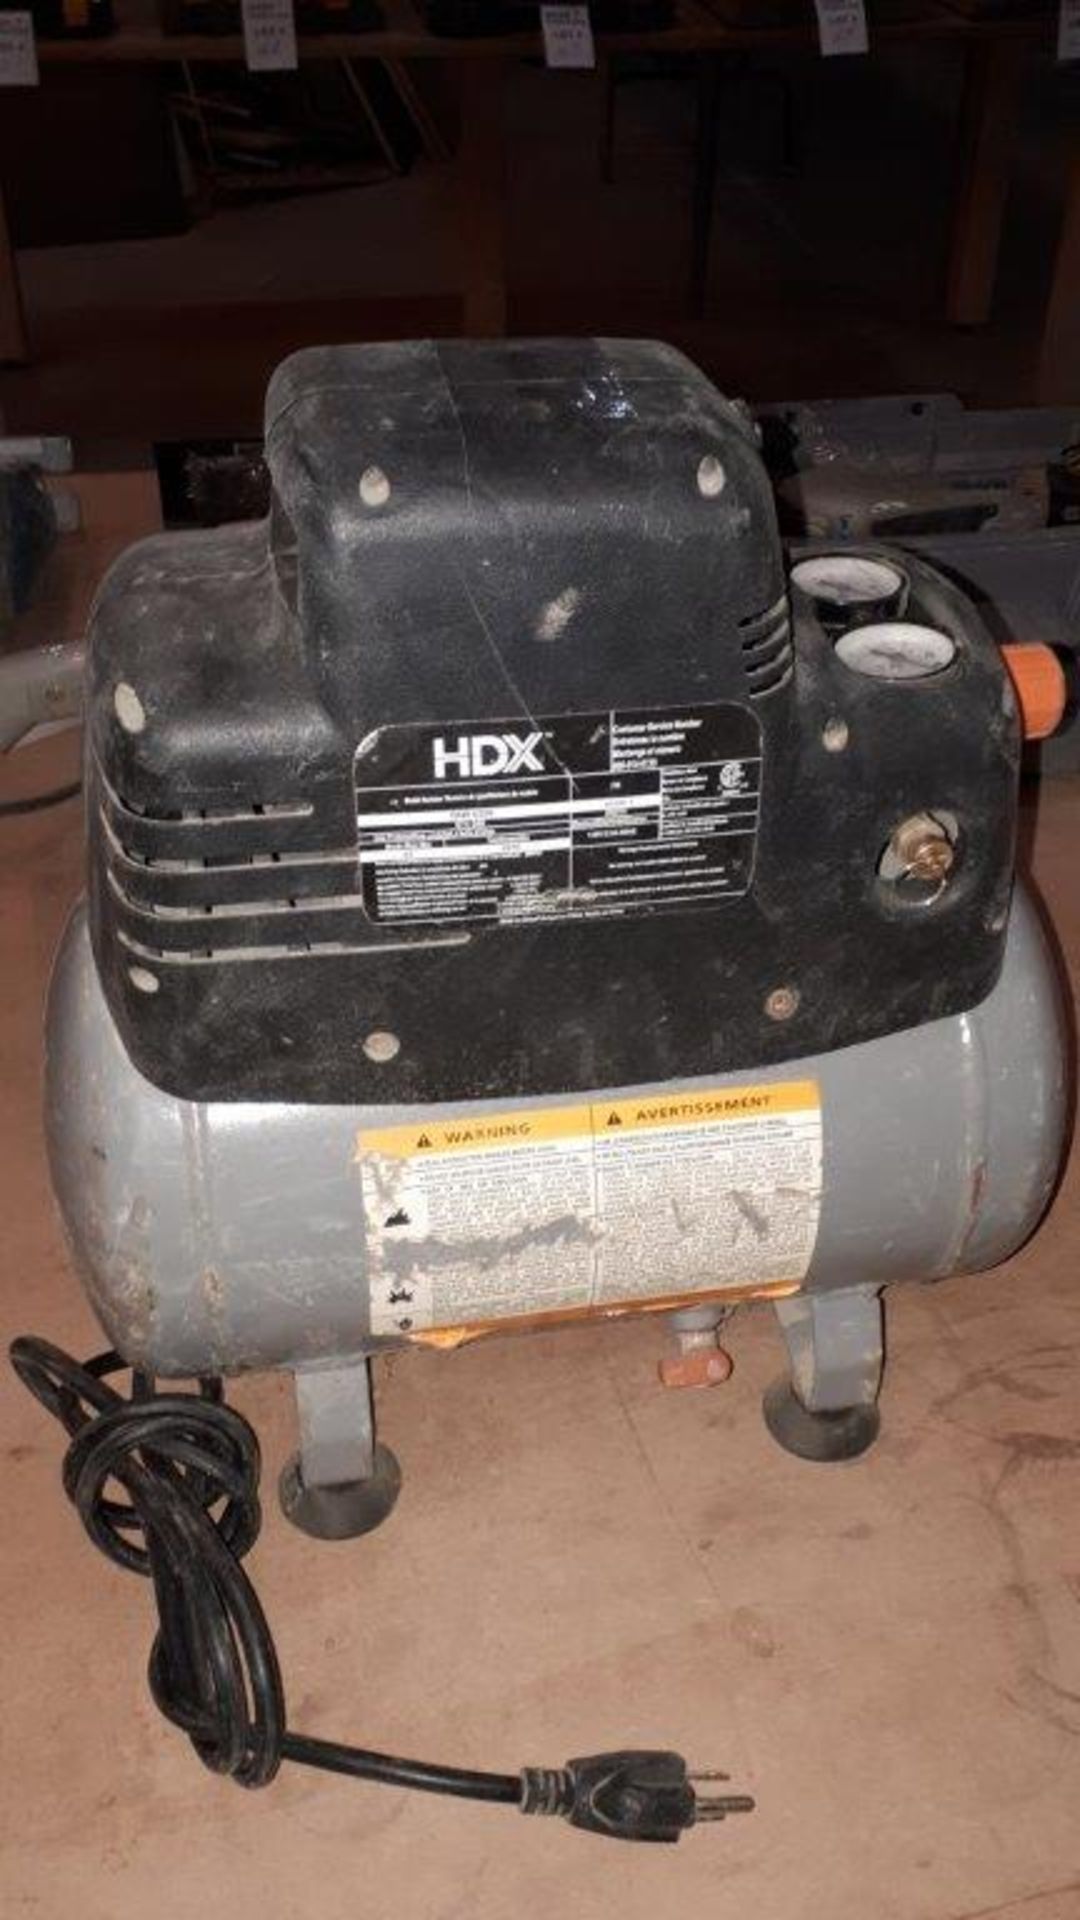 HDX Air Compressor - Image 3 of 3